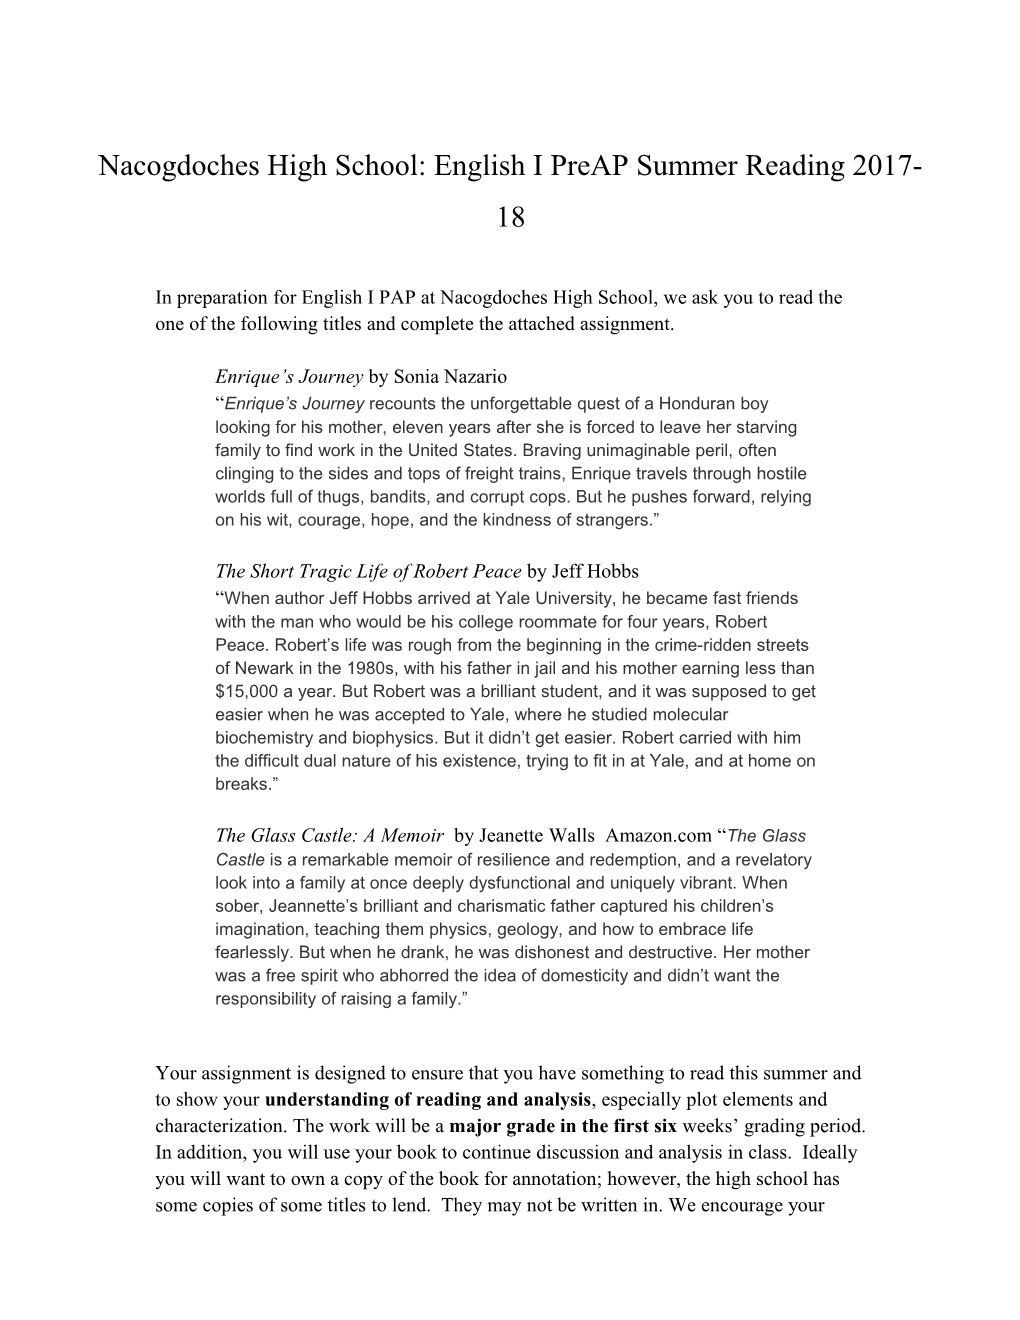 Nacogdoches High School: English I Preap Summer Reading 2017-18